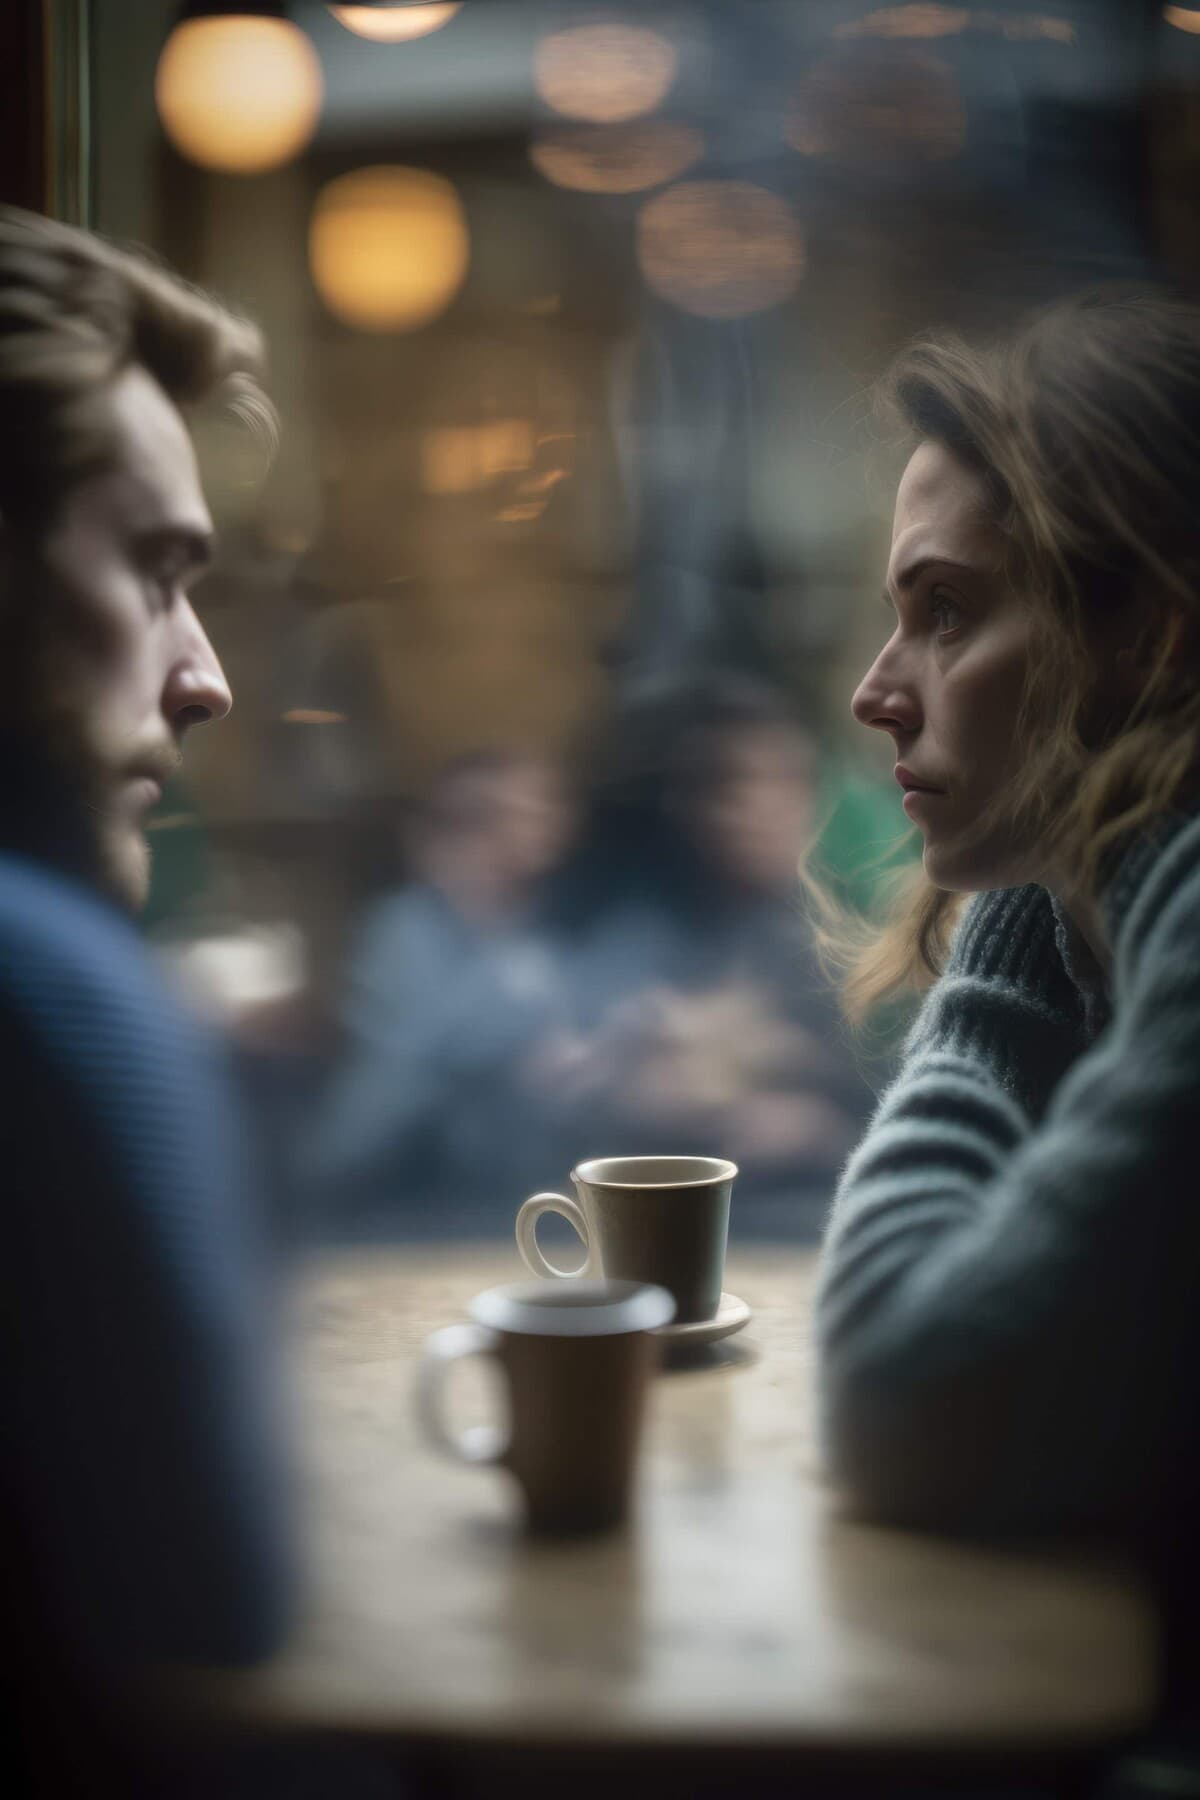 Couple having an emotional conversation in a café